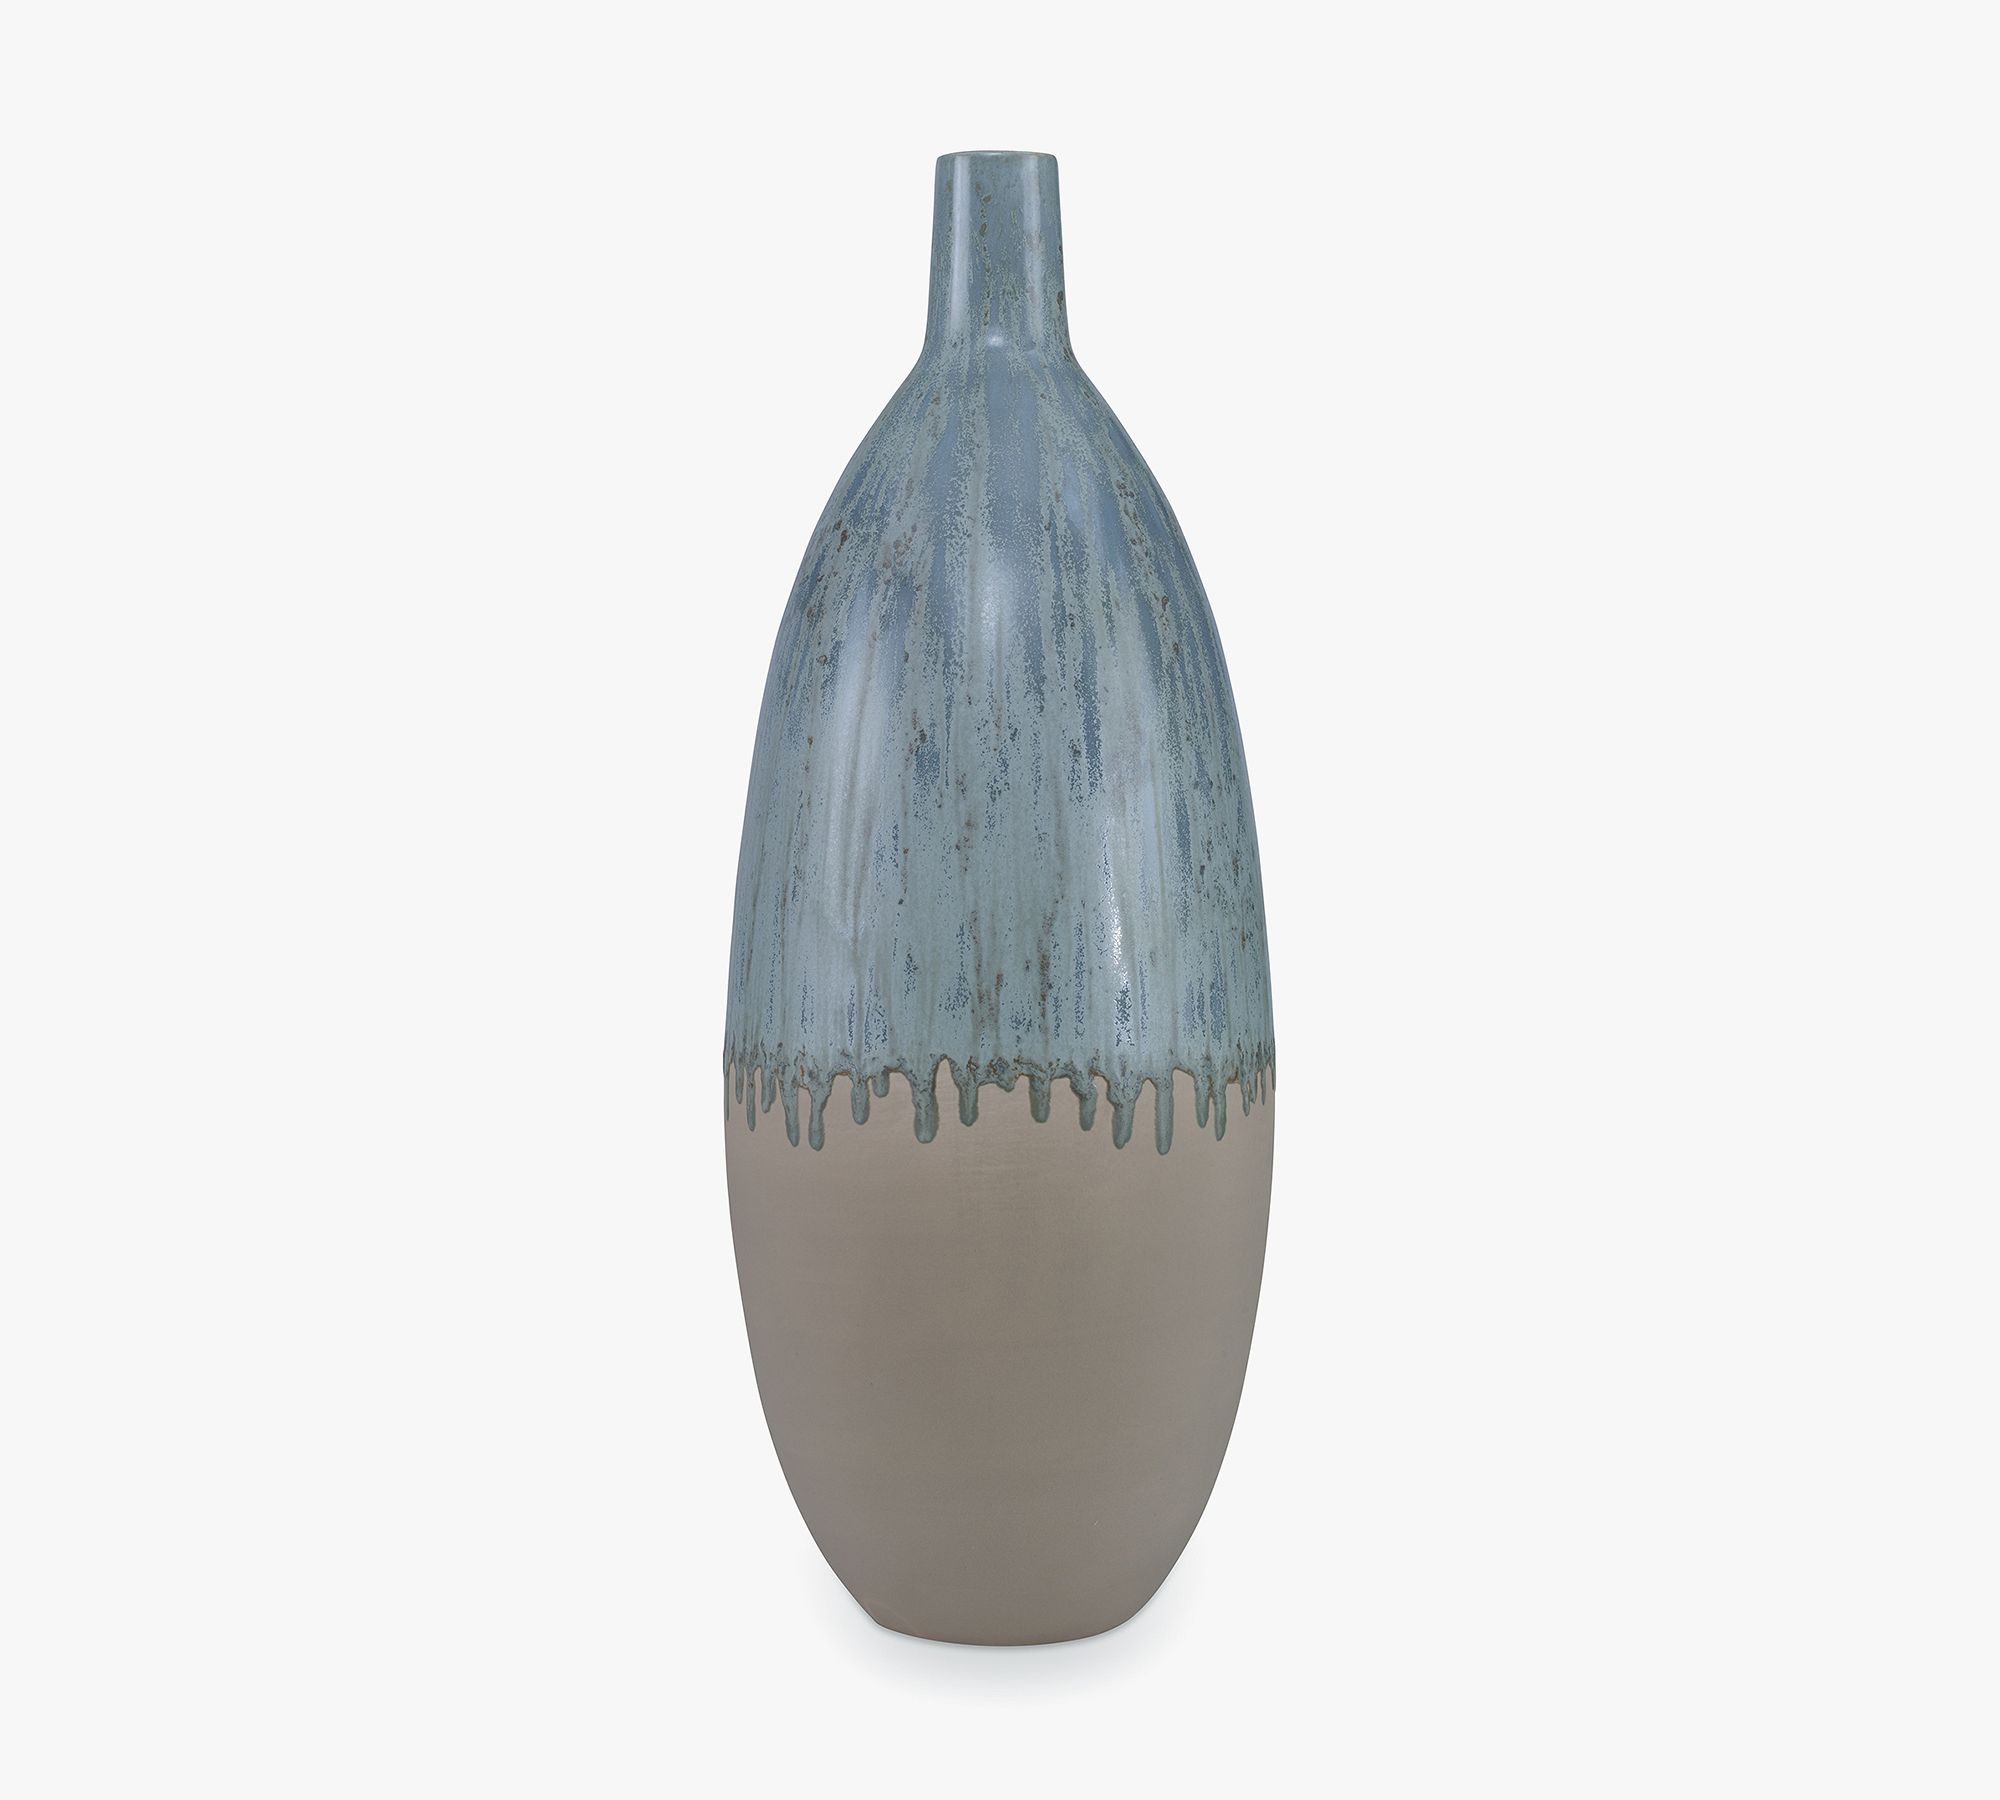 Arley Handcrafted Ceramic Vase